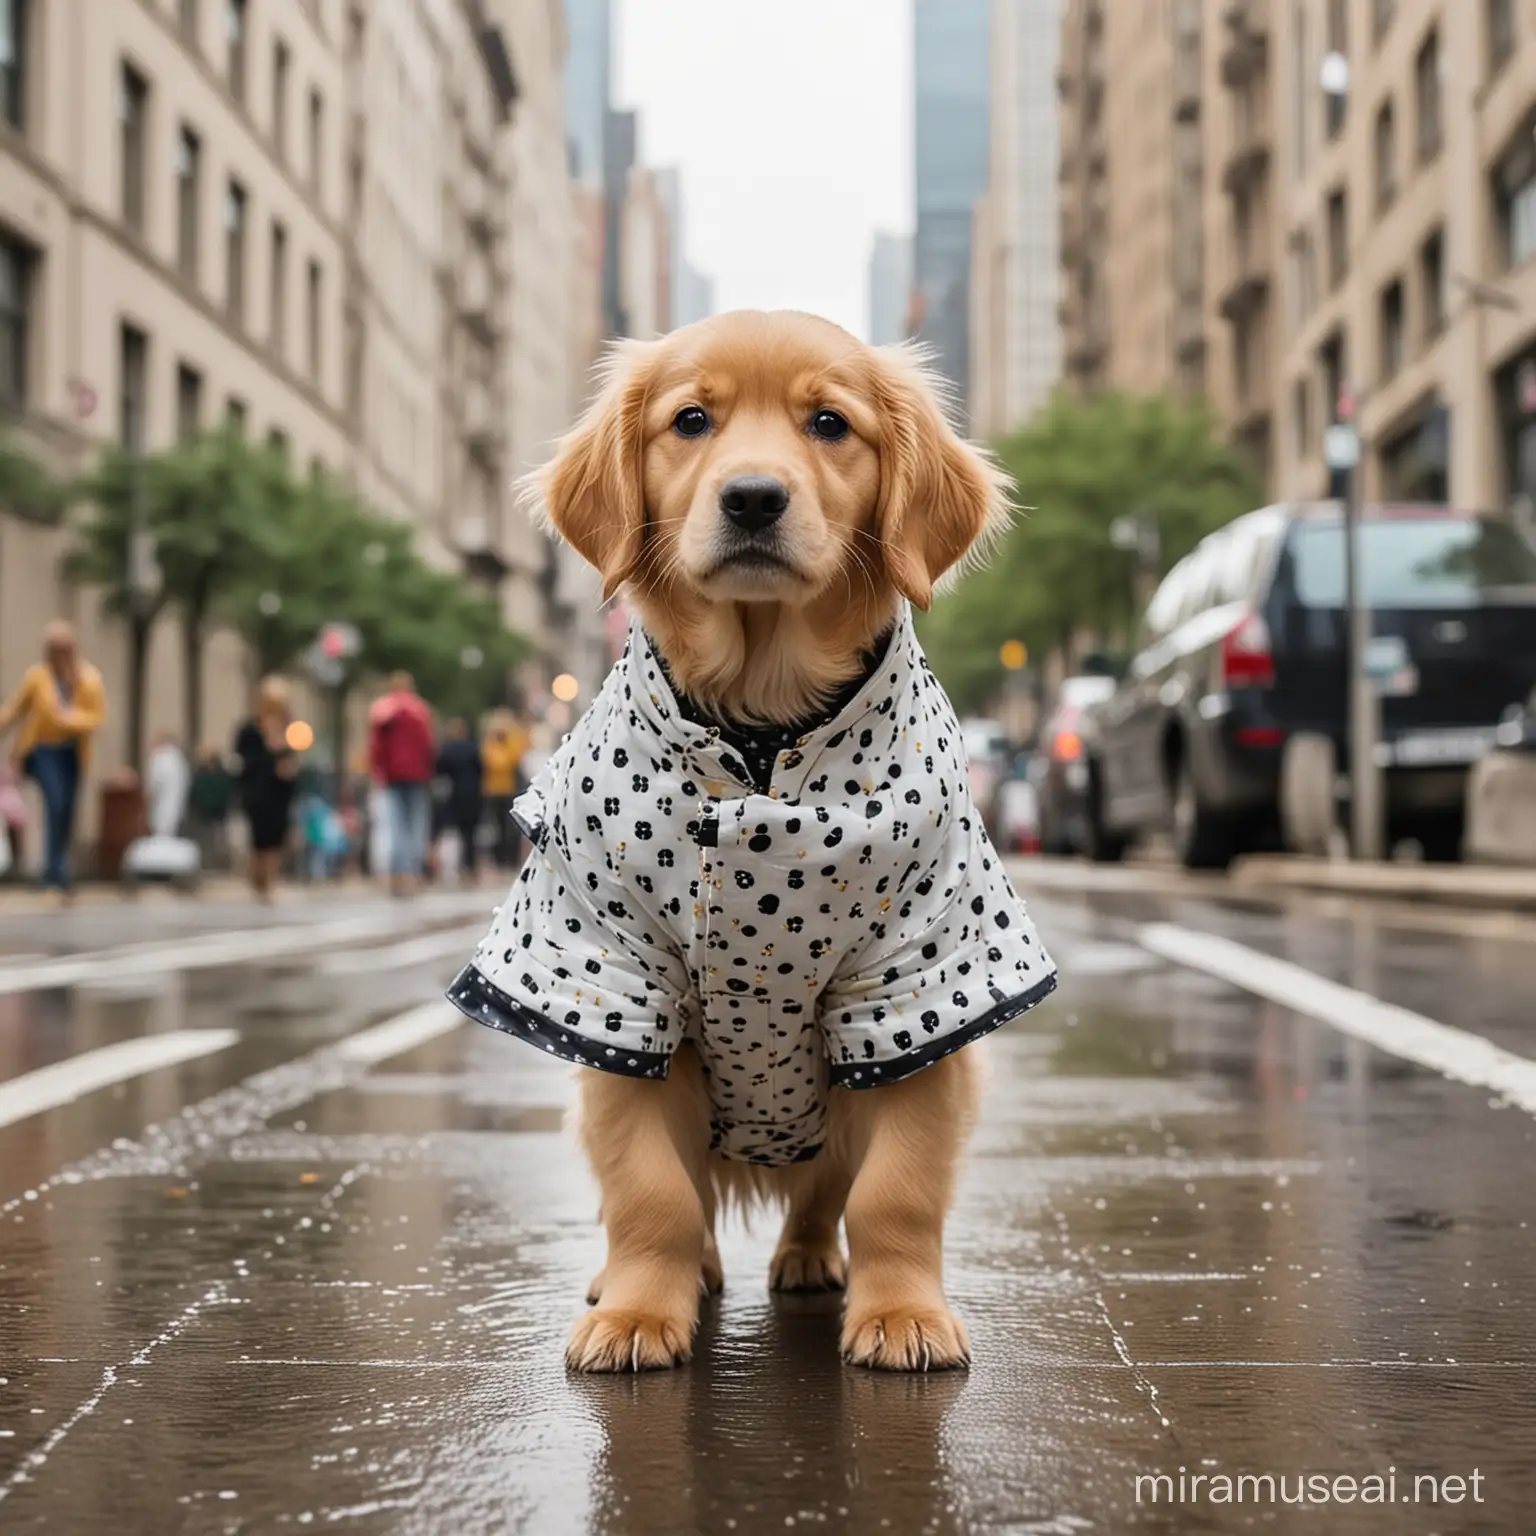 Fashionable PolkaDot Raincoat Puppy Strolling in Urban Cityscape